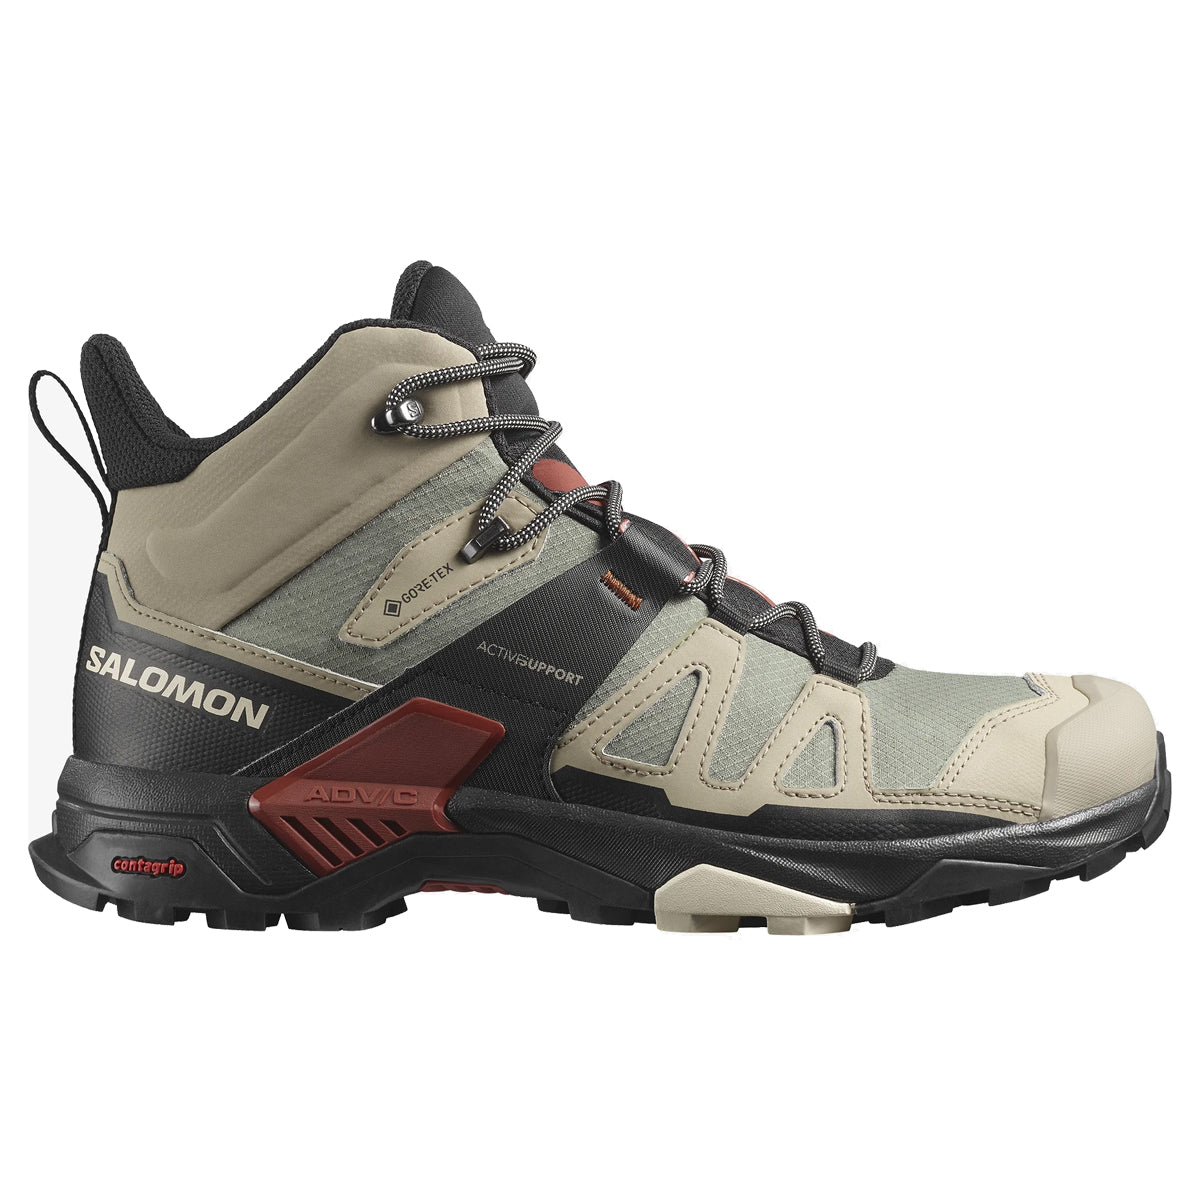 Salomon X ULTRA 4 MID GTX boots with waterproof Gore-Tex® membrane